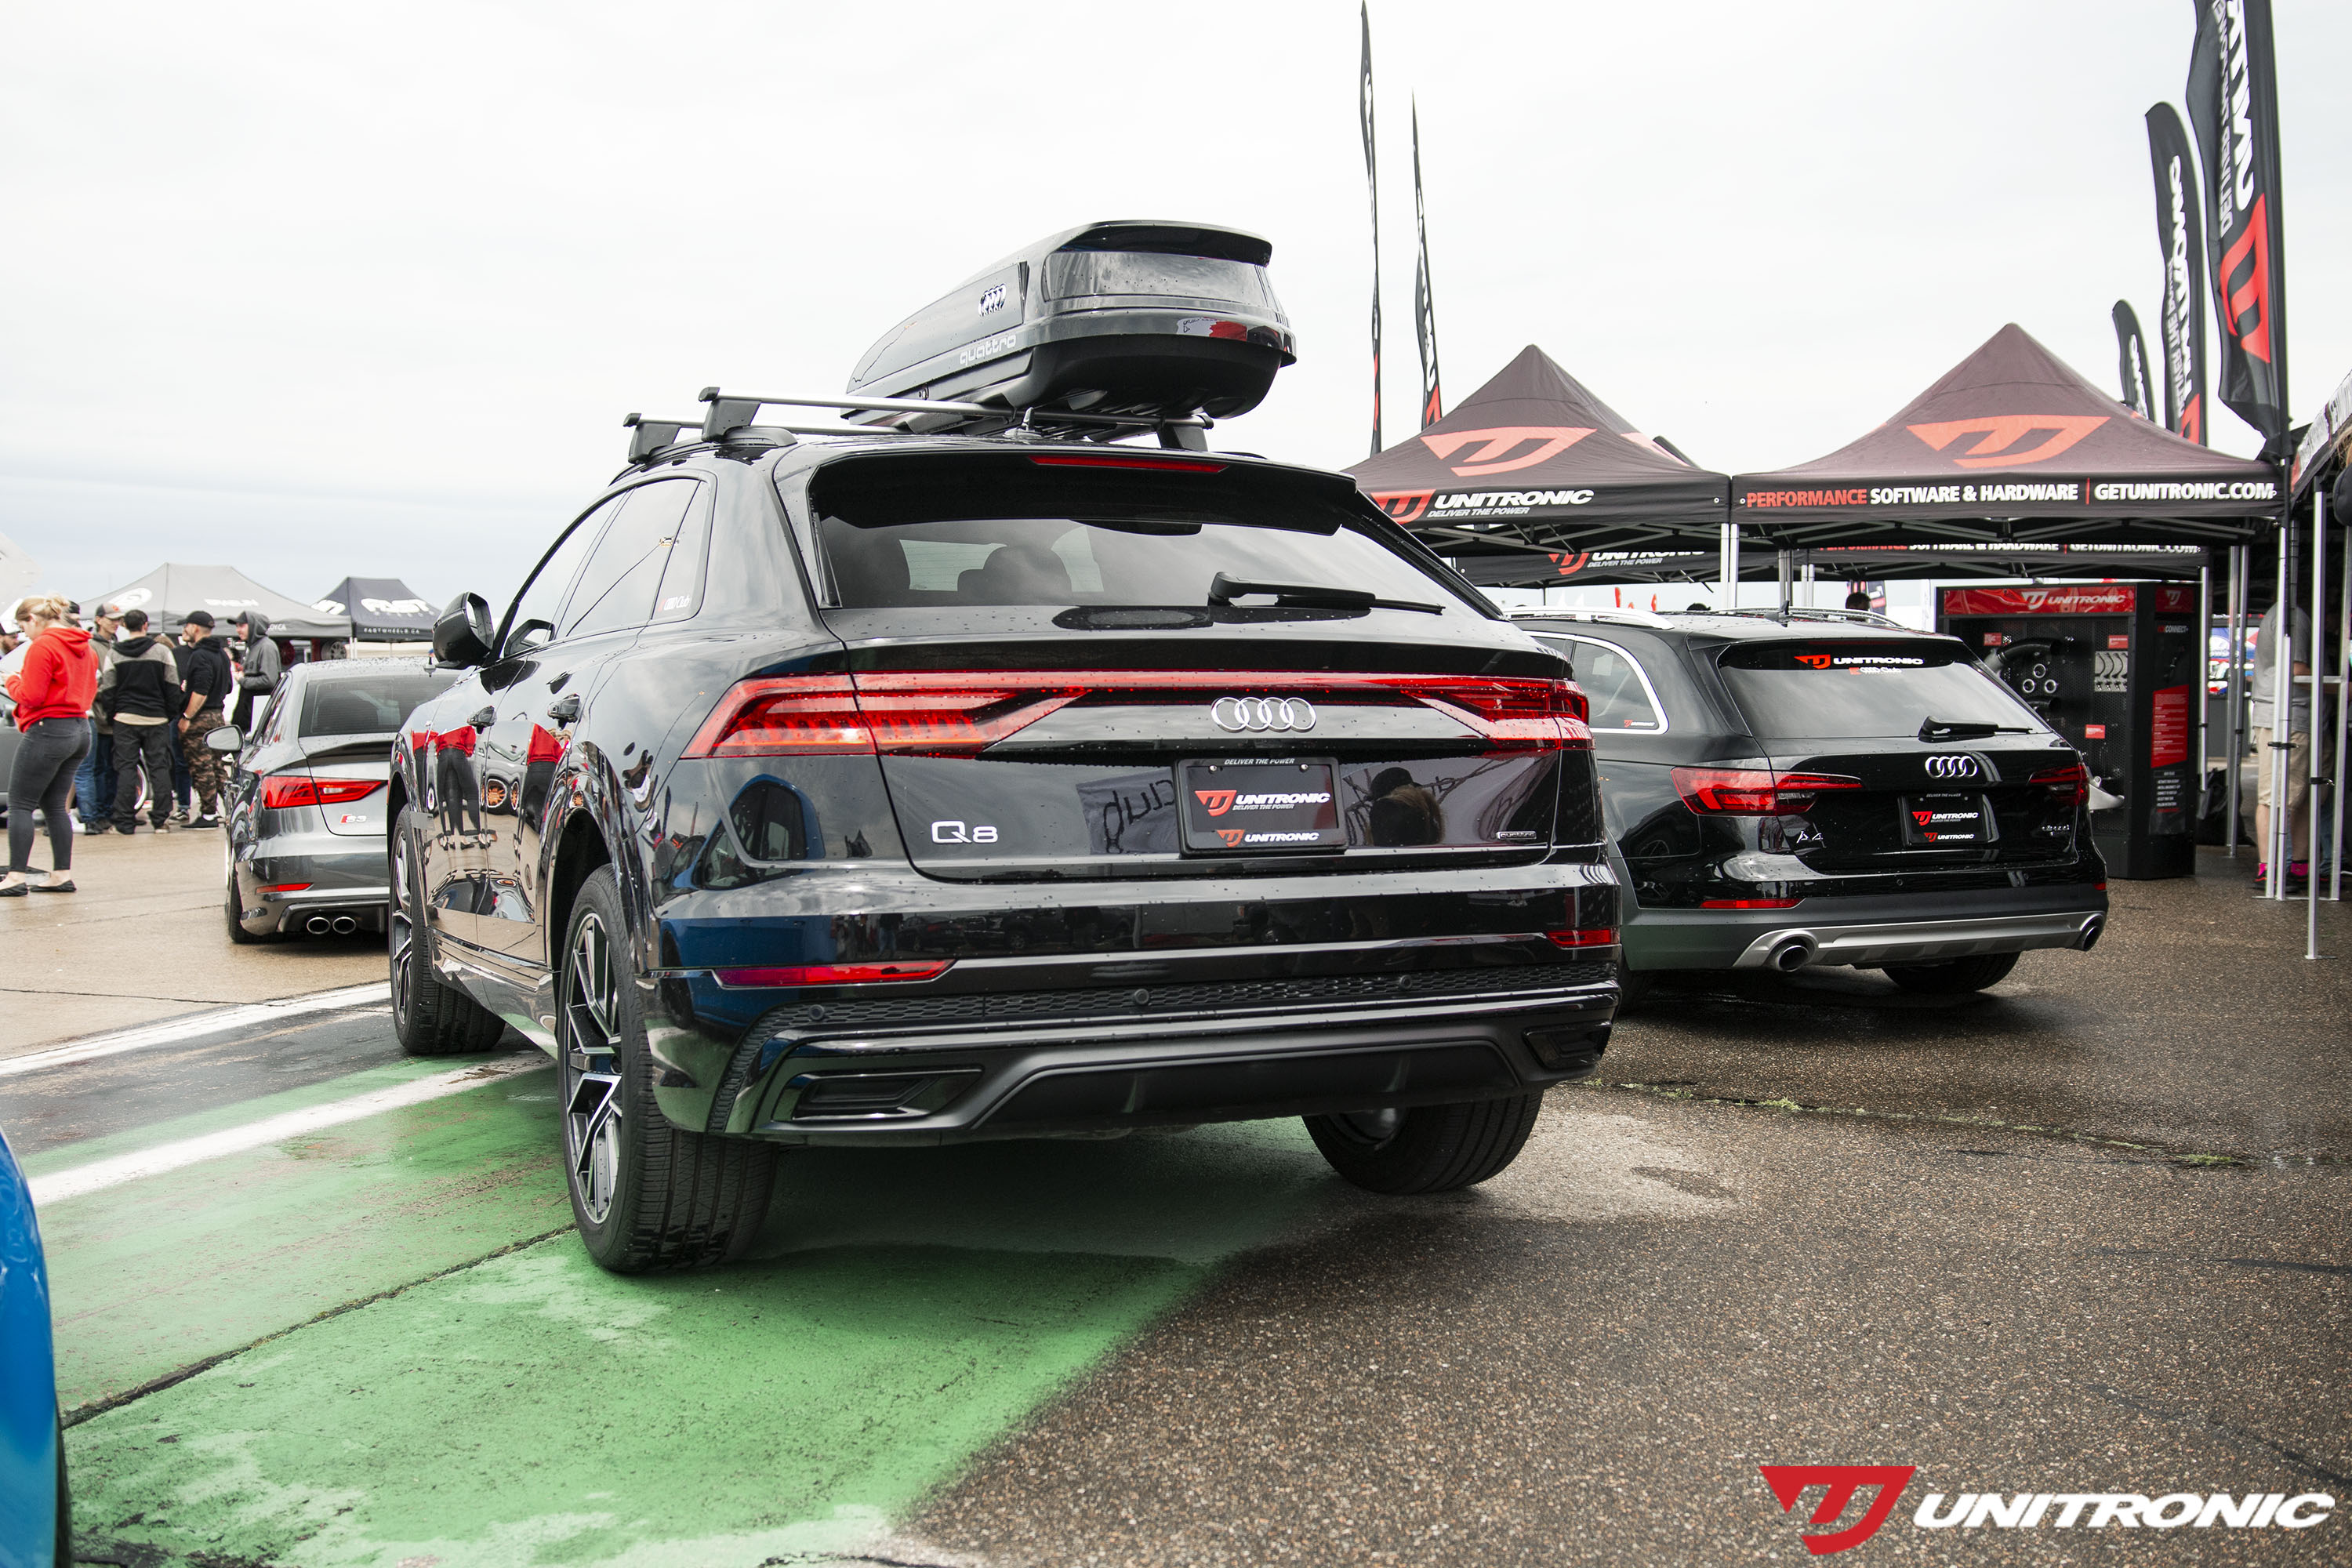 Audi Q8 2019 on display at Eurokracy